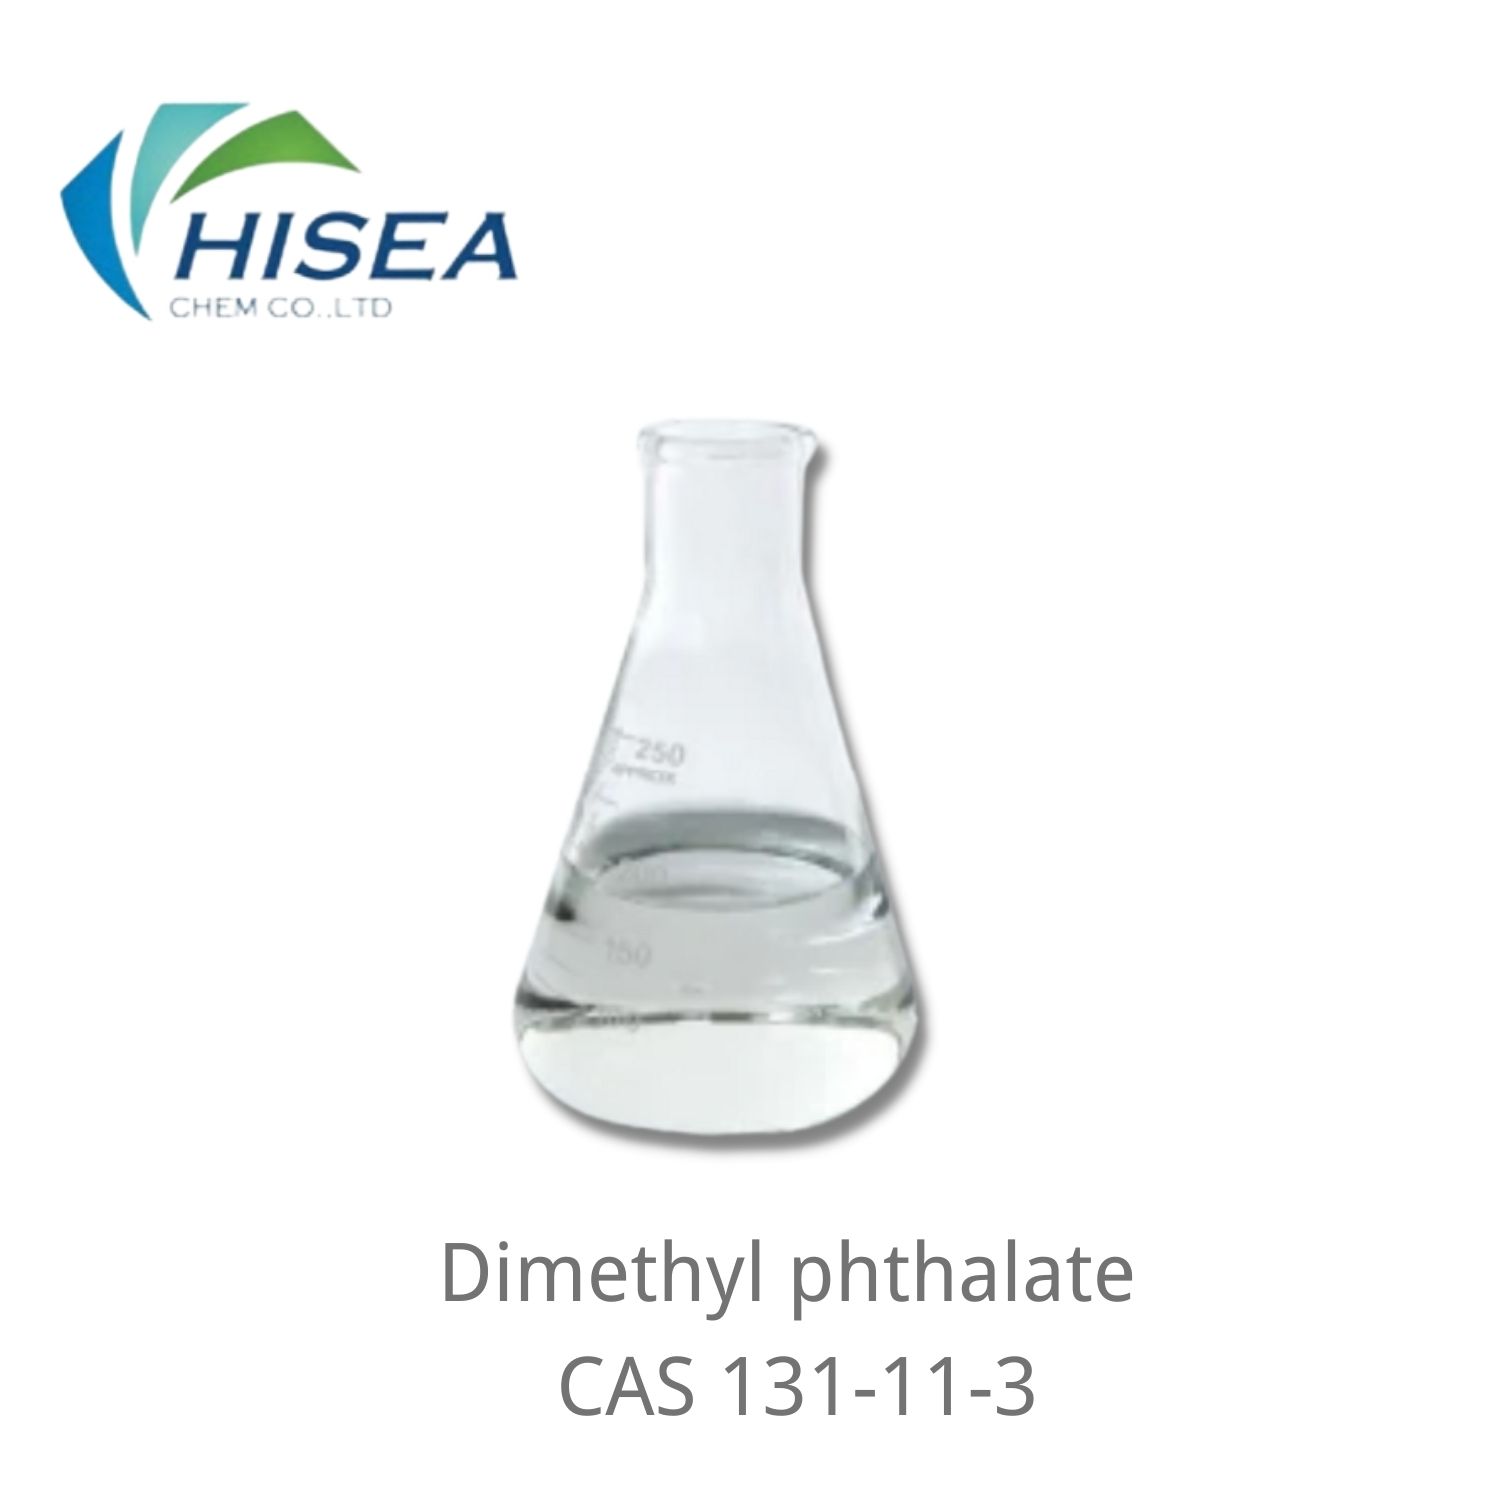 Composite-Synthese in Industriequalität Dimethylphthalat